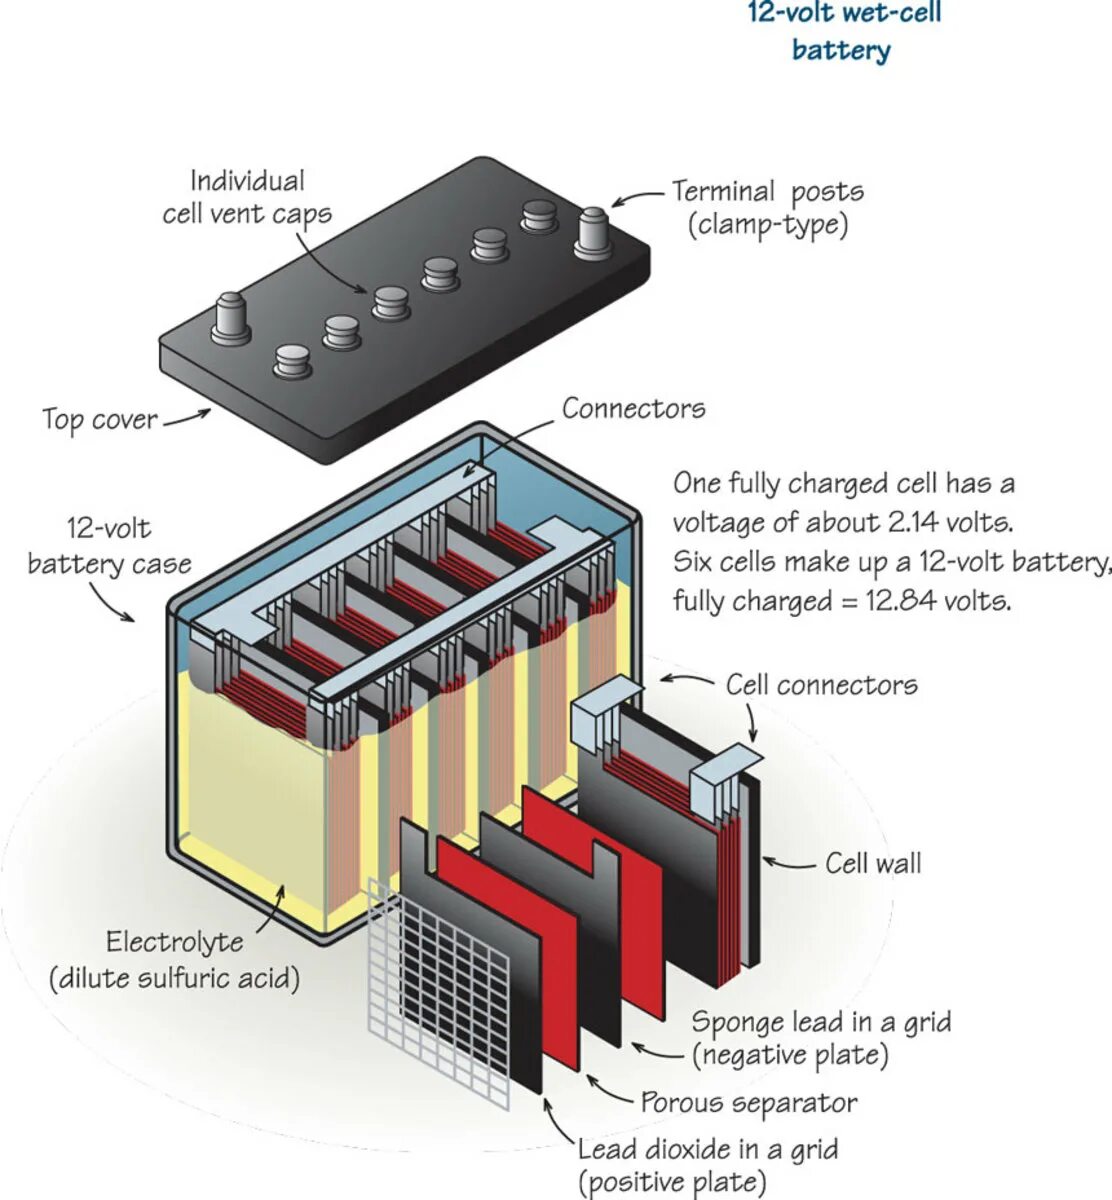 Storage batteries. Remington Battery Cell. Radial Appliance, wet Cell Battery. Wet Cell Battery Кейси. Tab аккумуляторы Cell.